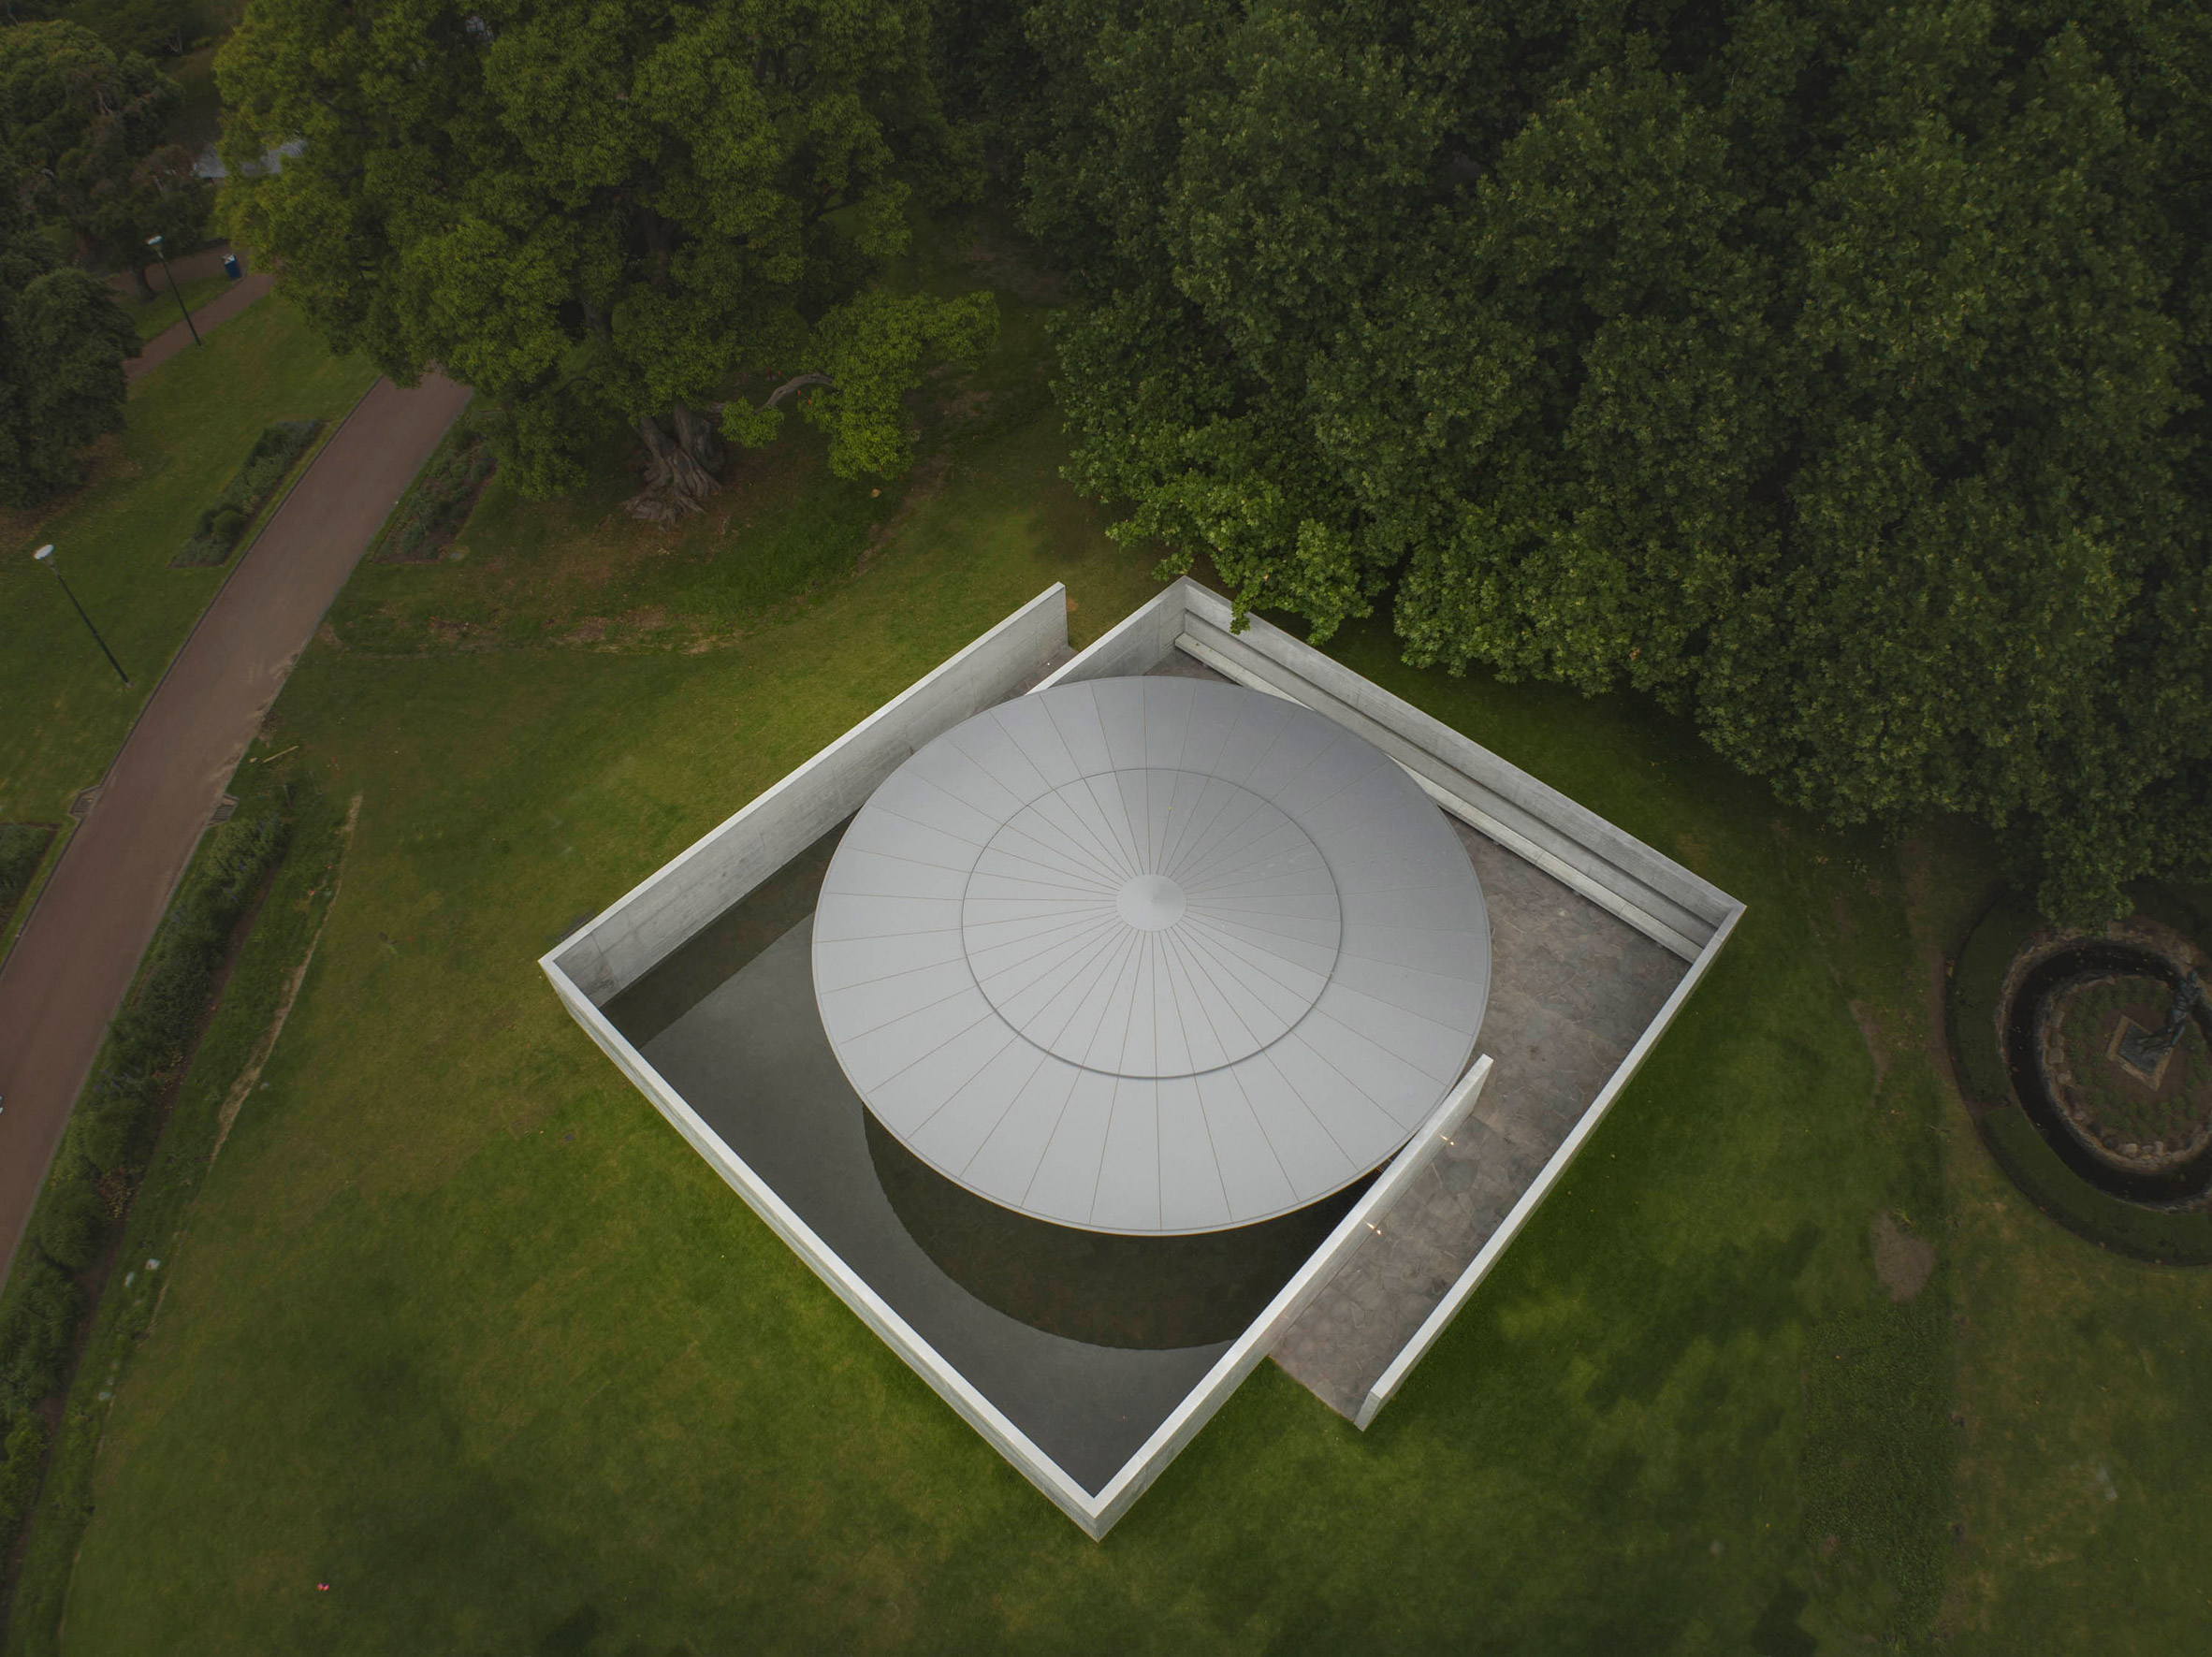 Geometric pavilion by Tadao Ando